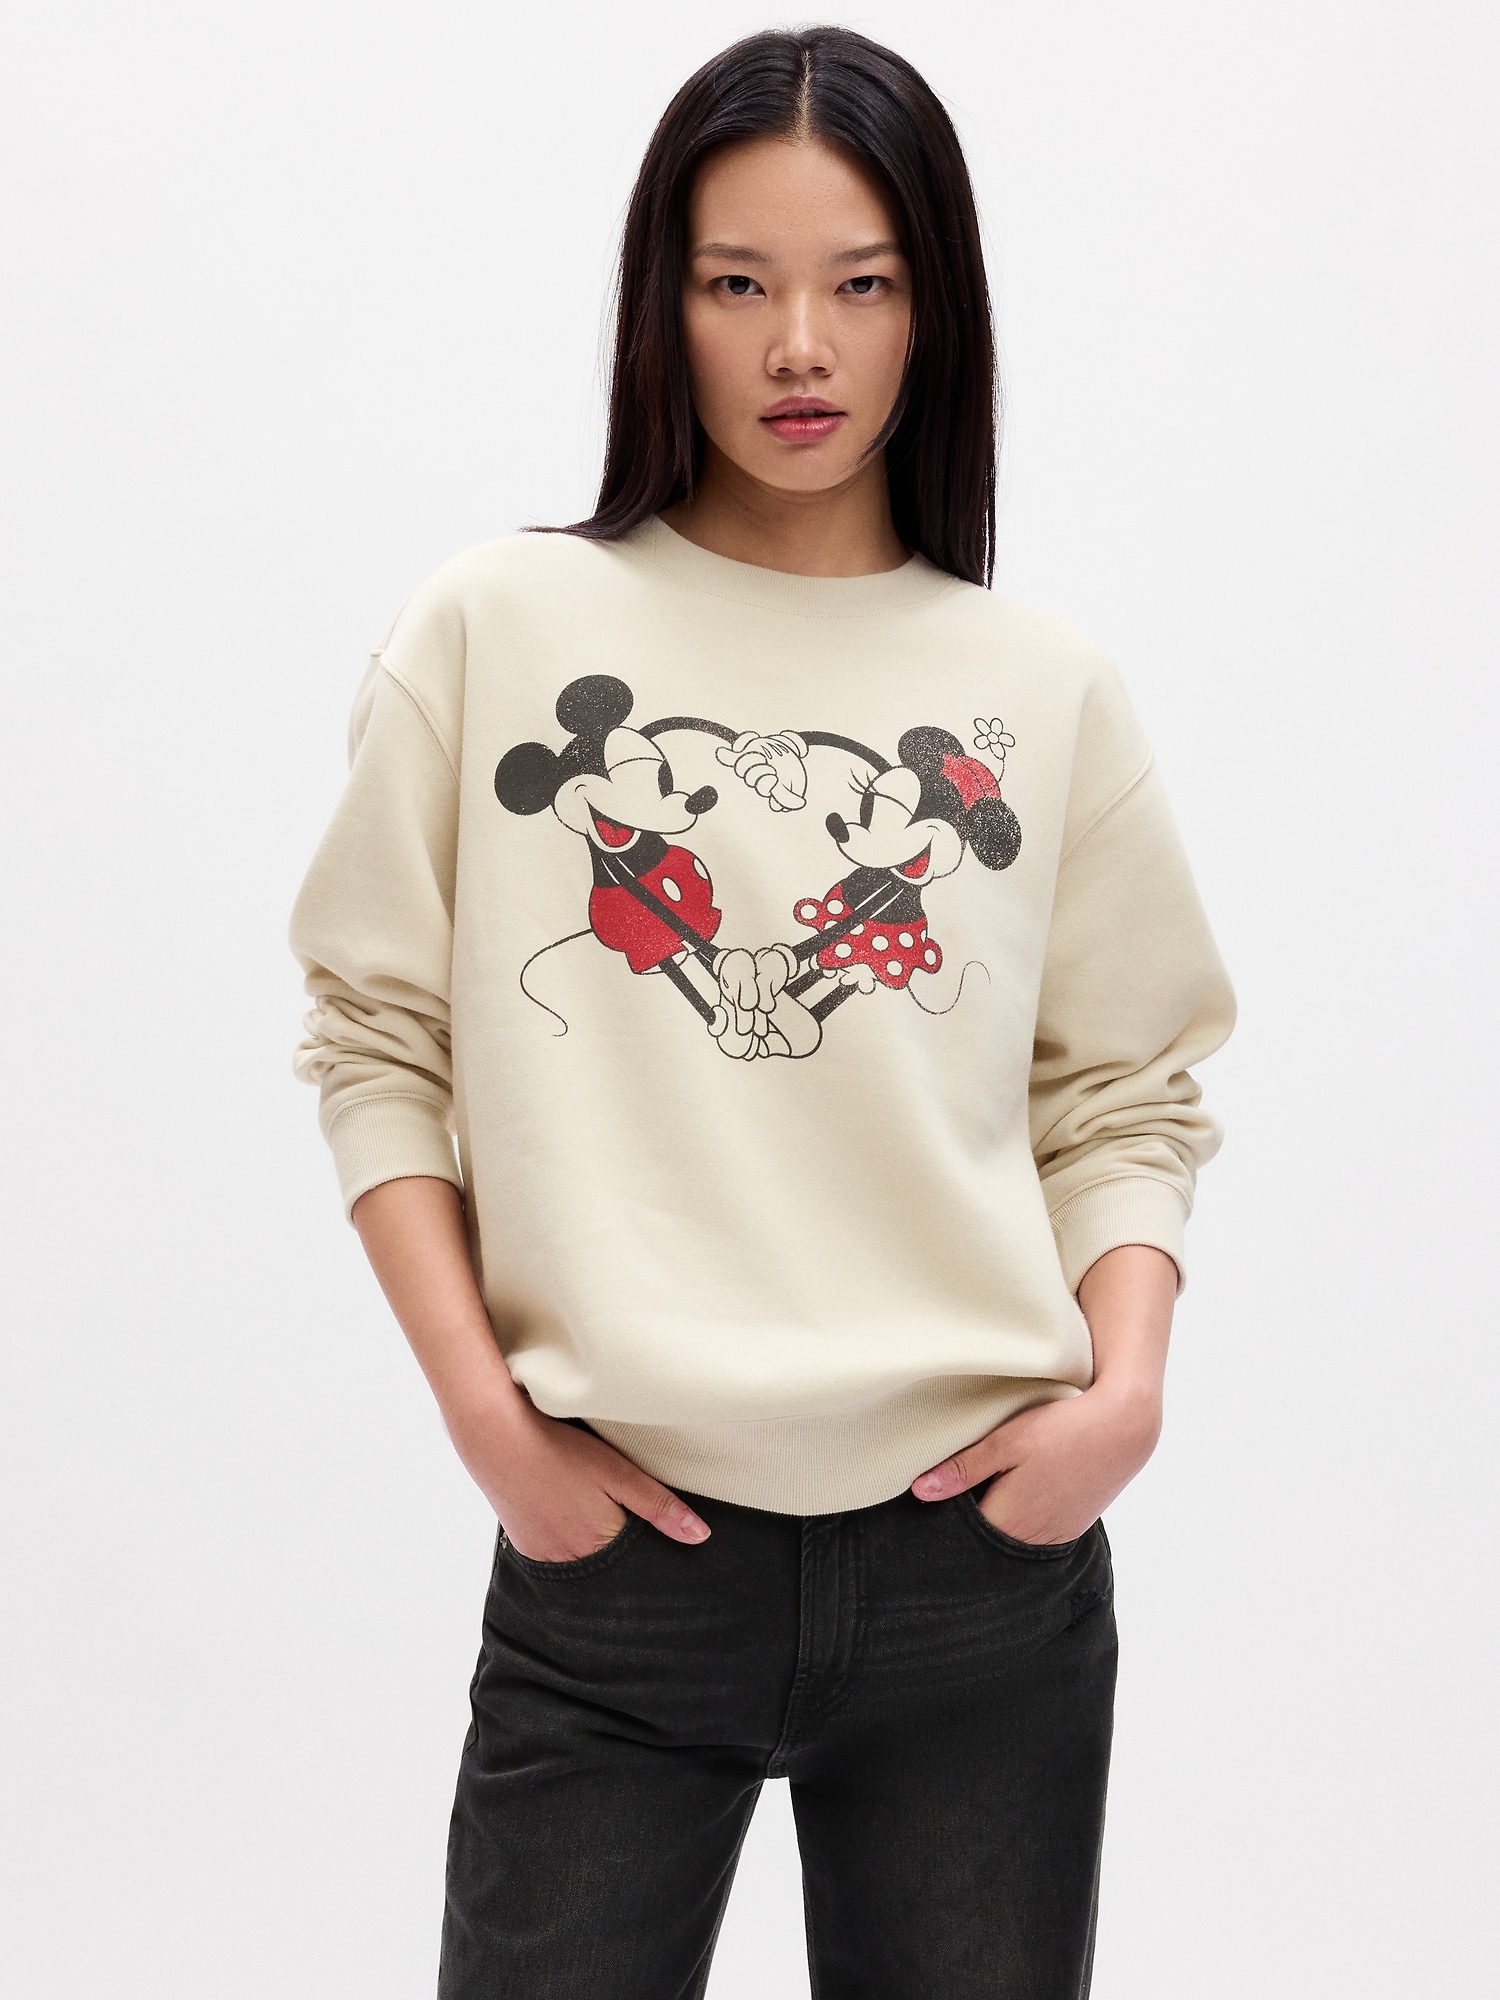 Women's Disney 100 Mickey Minnie Graphic Hoodie - Red Xl : Target